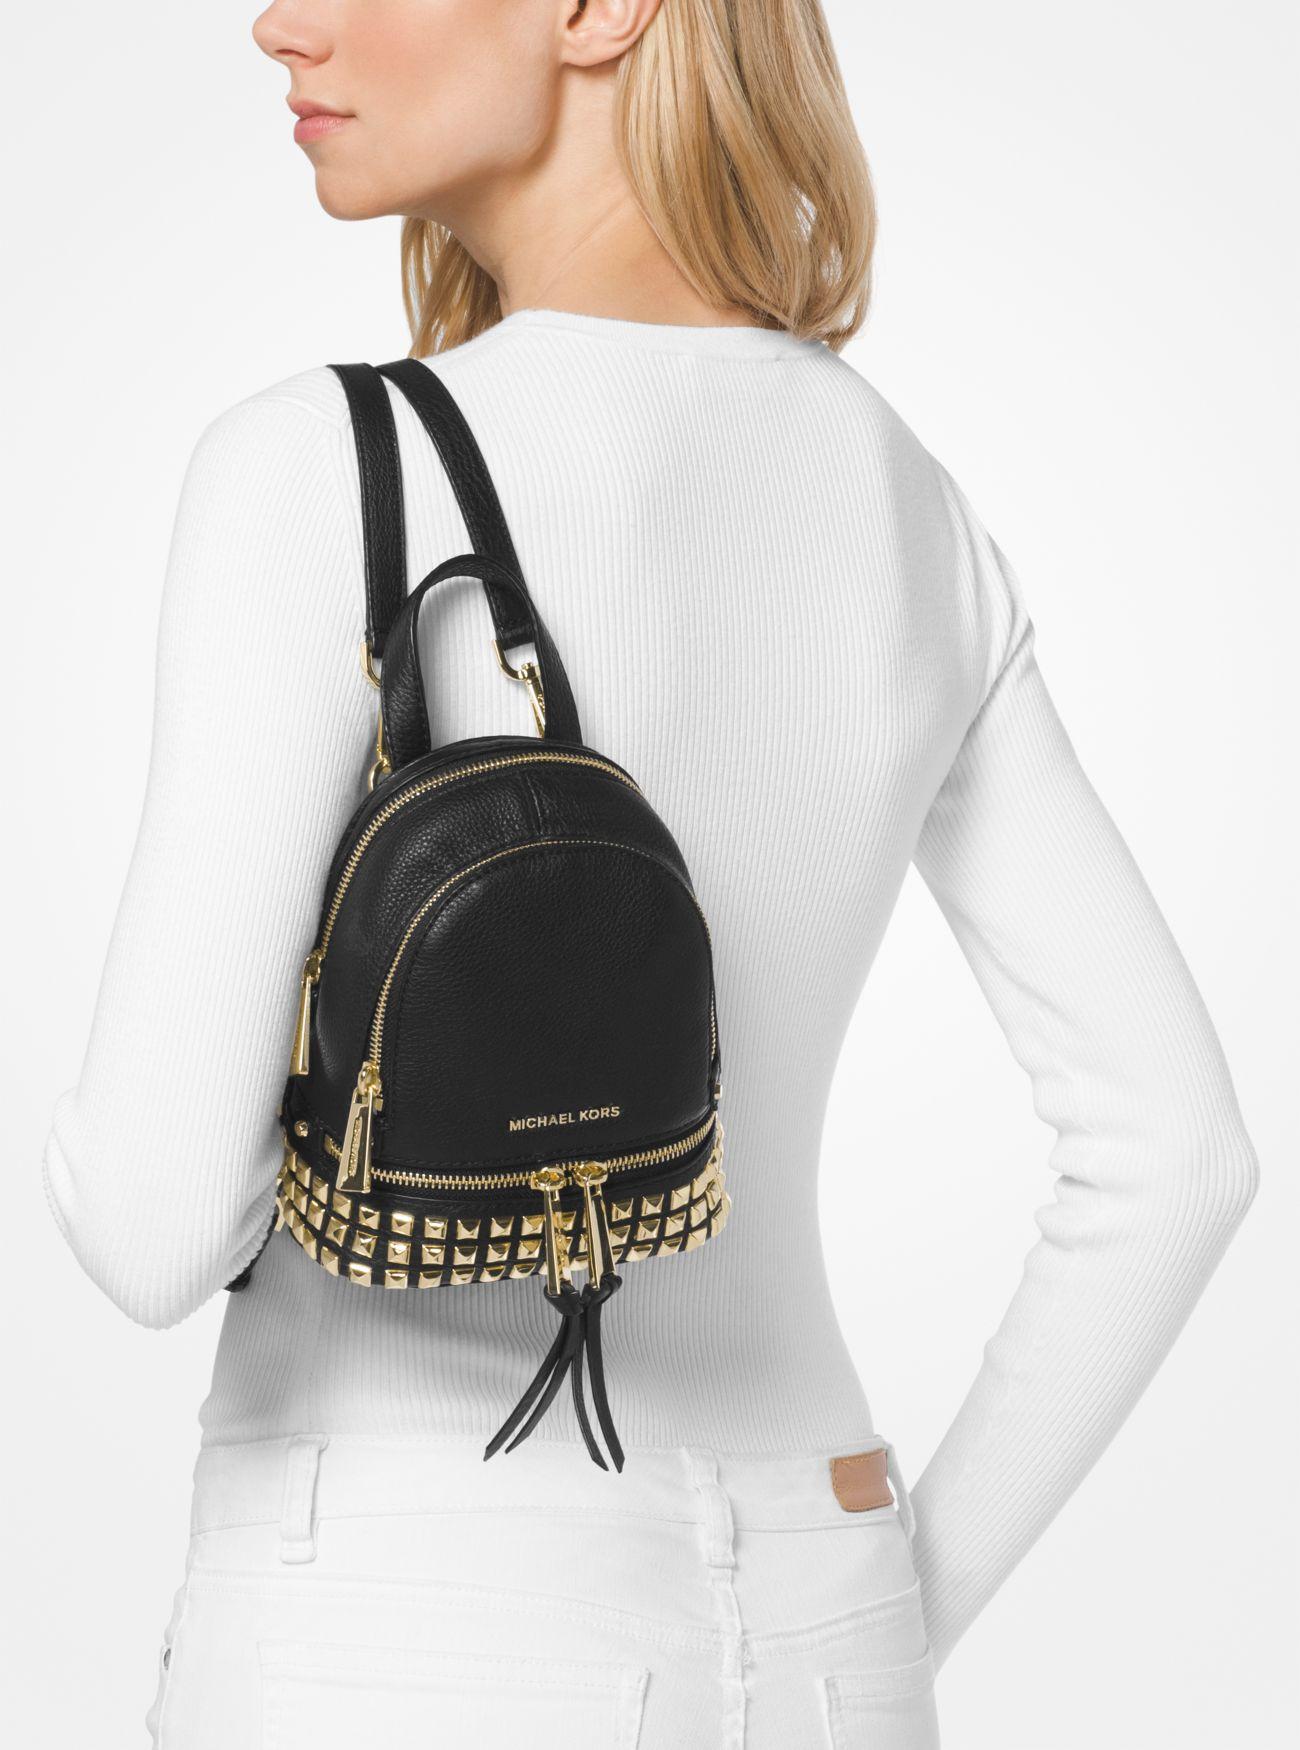 Michael Kors Black Rhea Studded Leather Backpack 